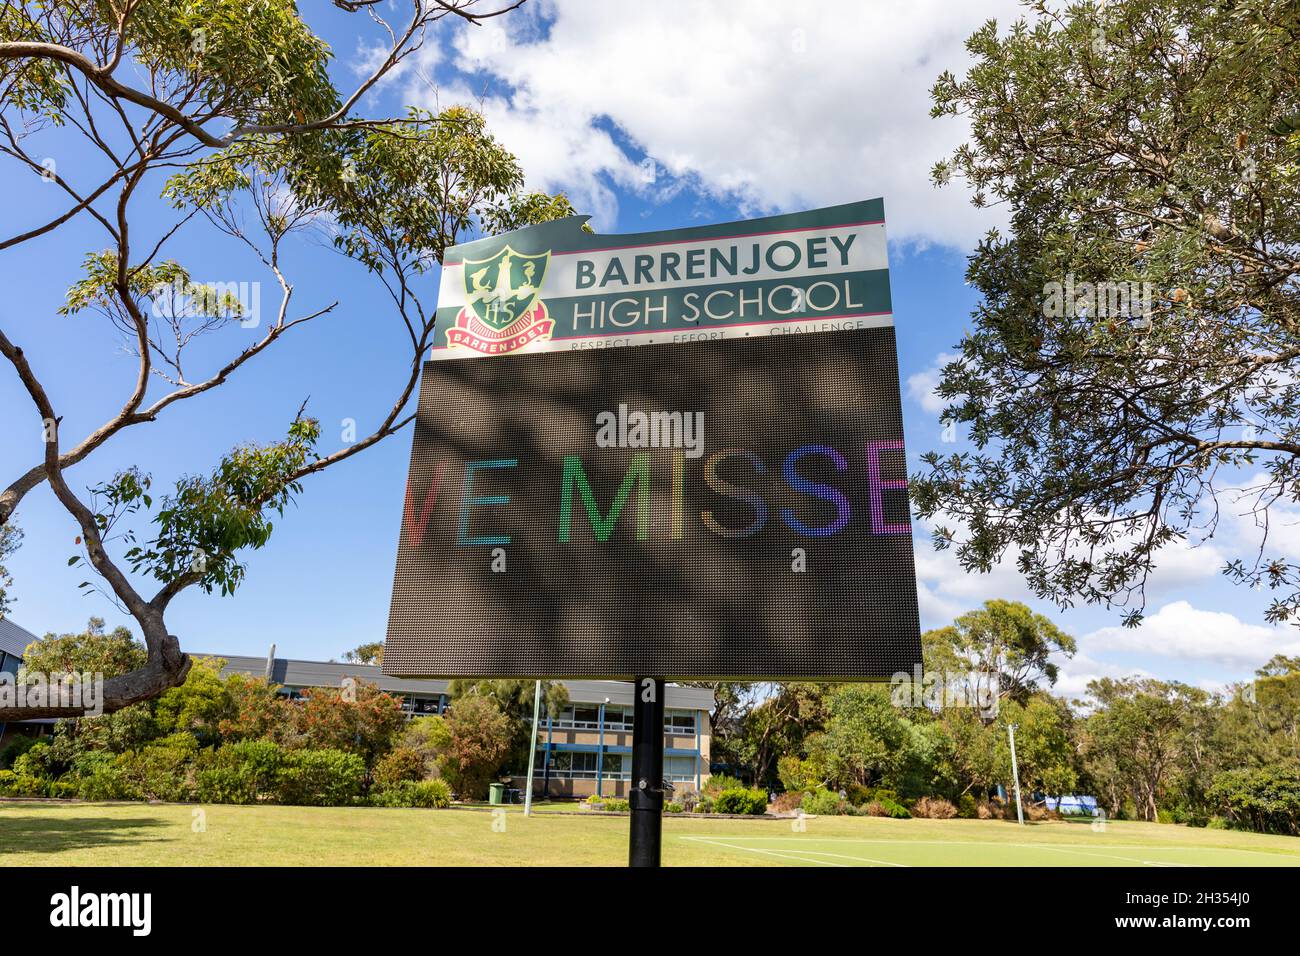 Sydney public schools reopen post covid 19 lockdown, Barrenjoey school electronic sign tells students we missed you,Sydney,Australia Stock Photo